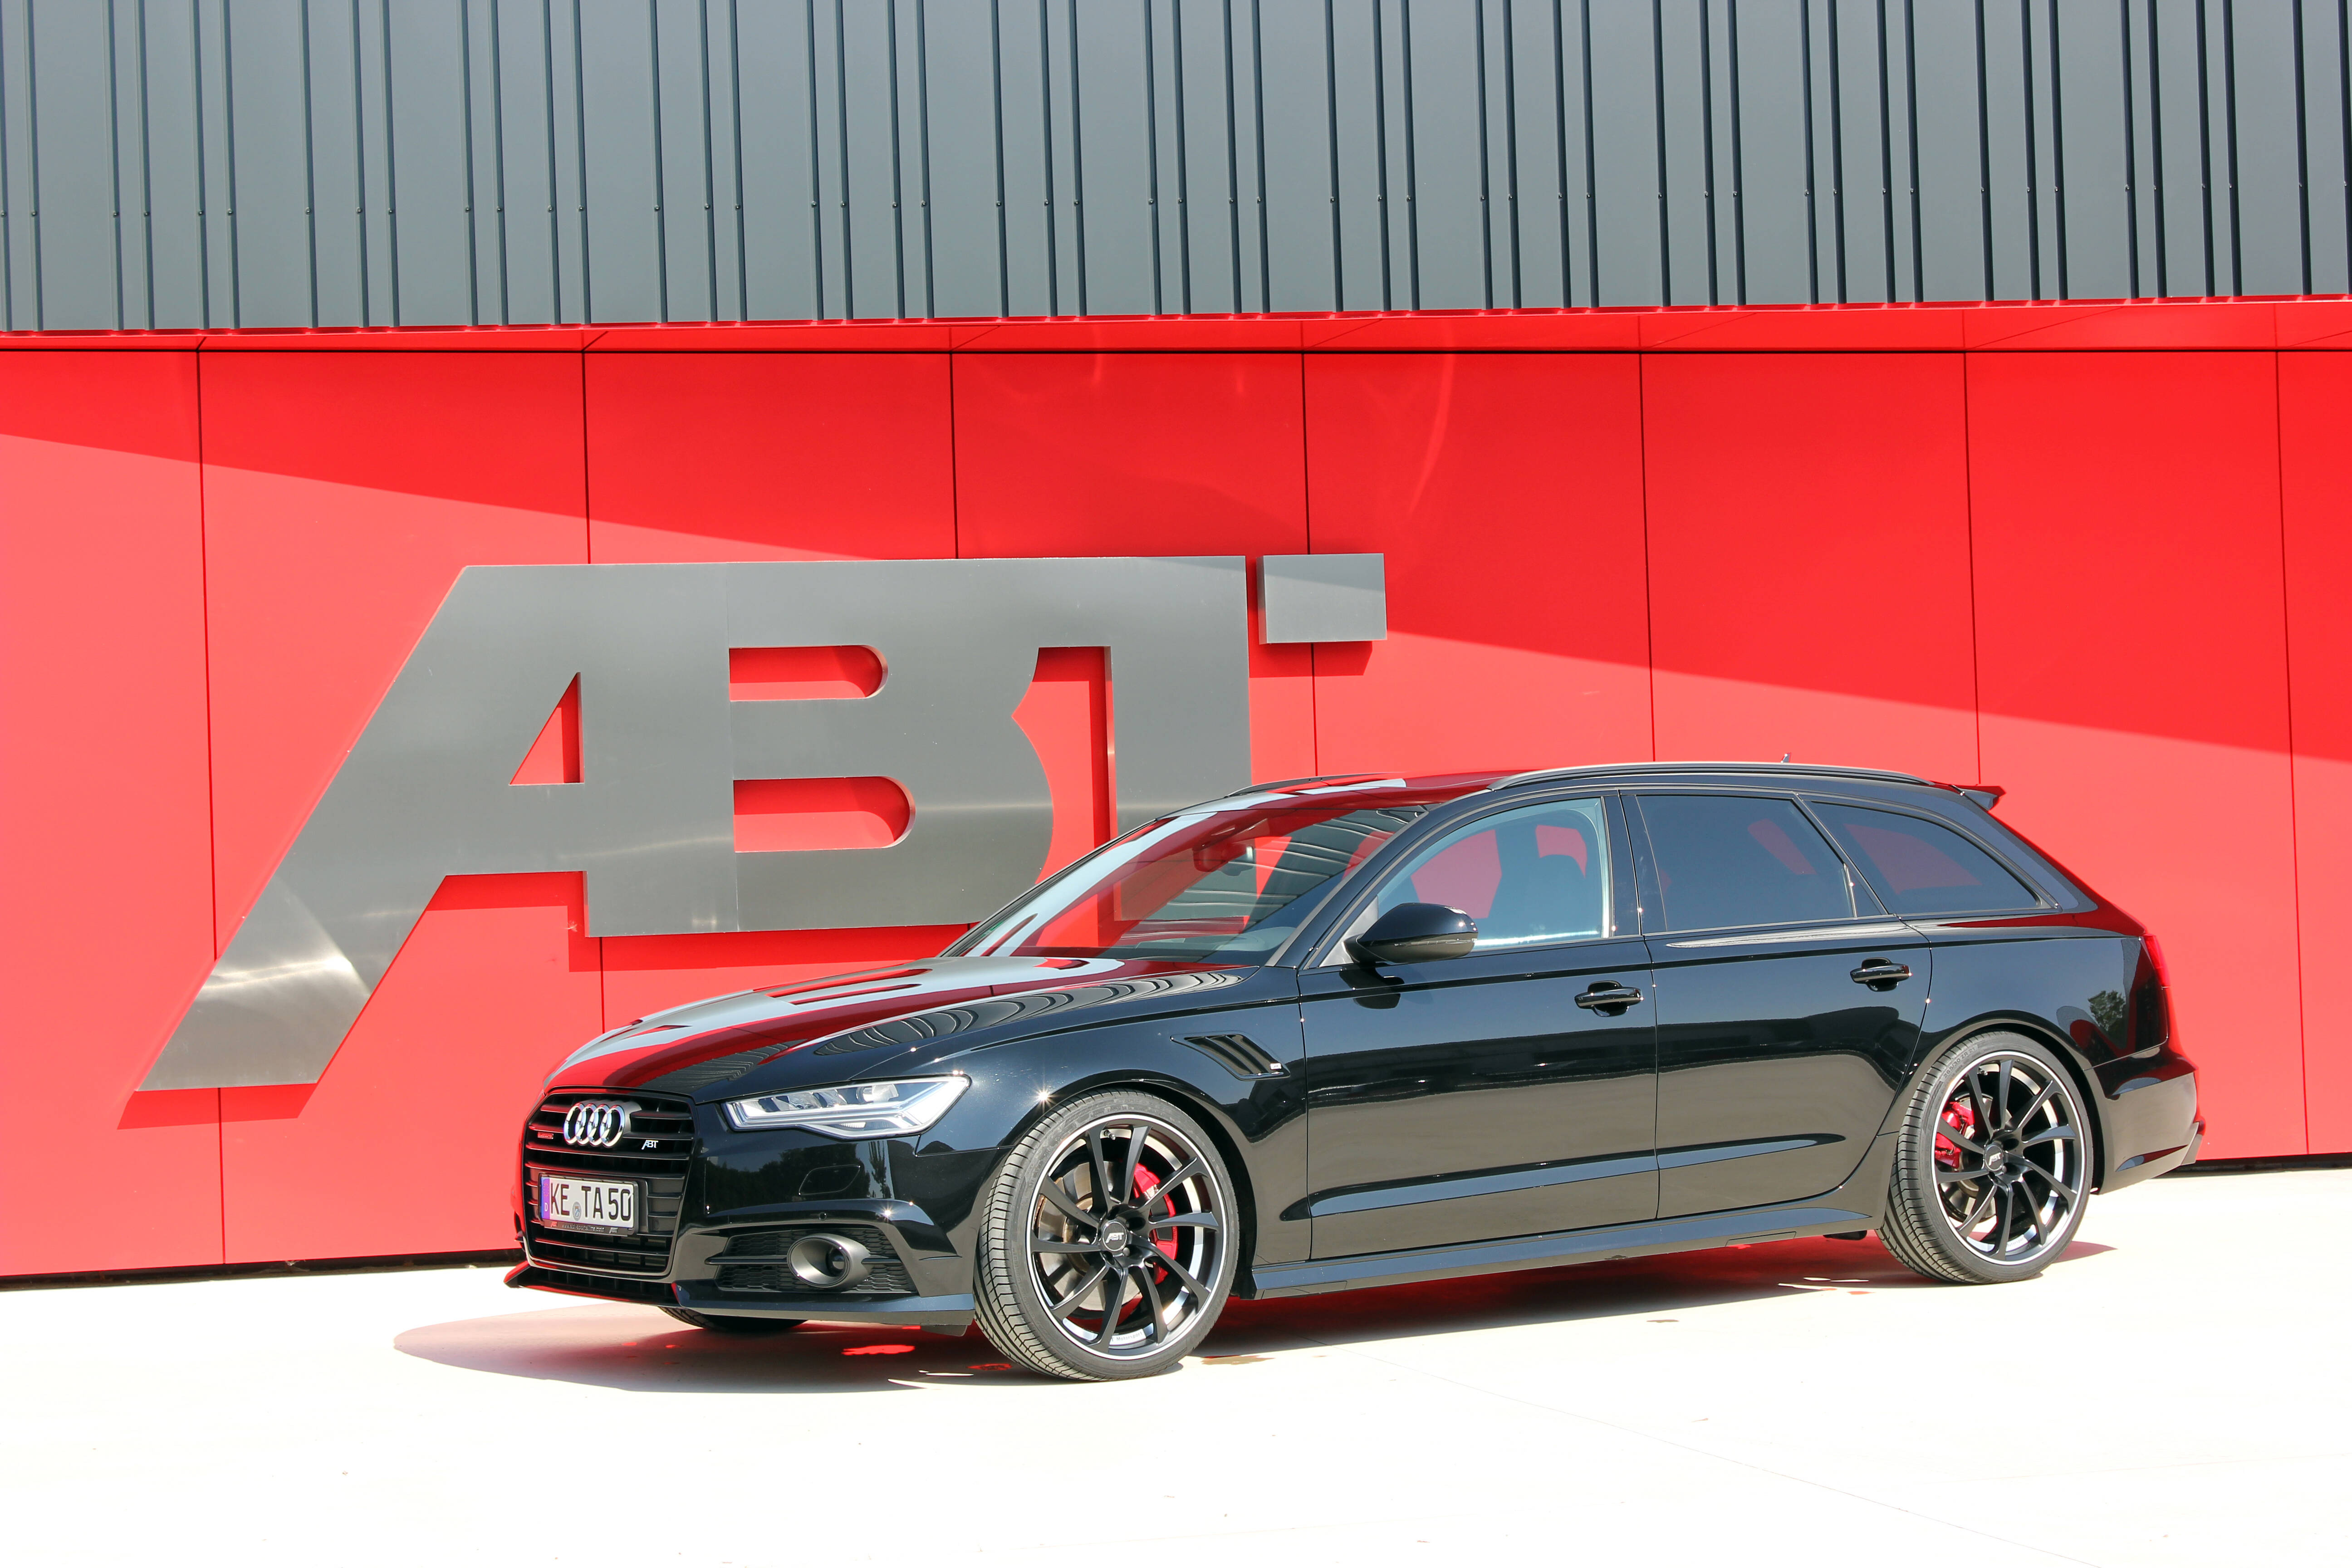 Audi A6 - Audi Tuning, VW Tuning, Chiptuning von ABT Sportsline.